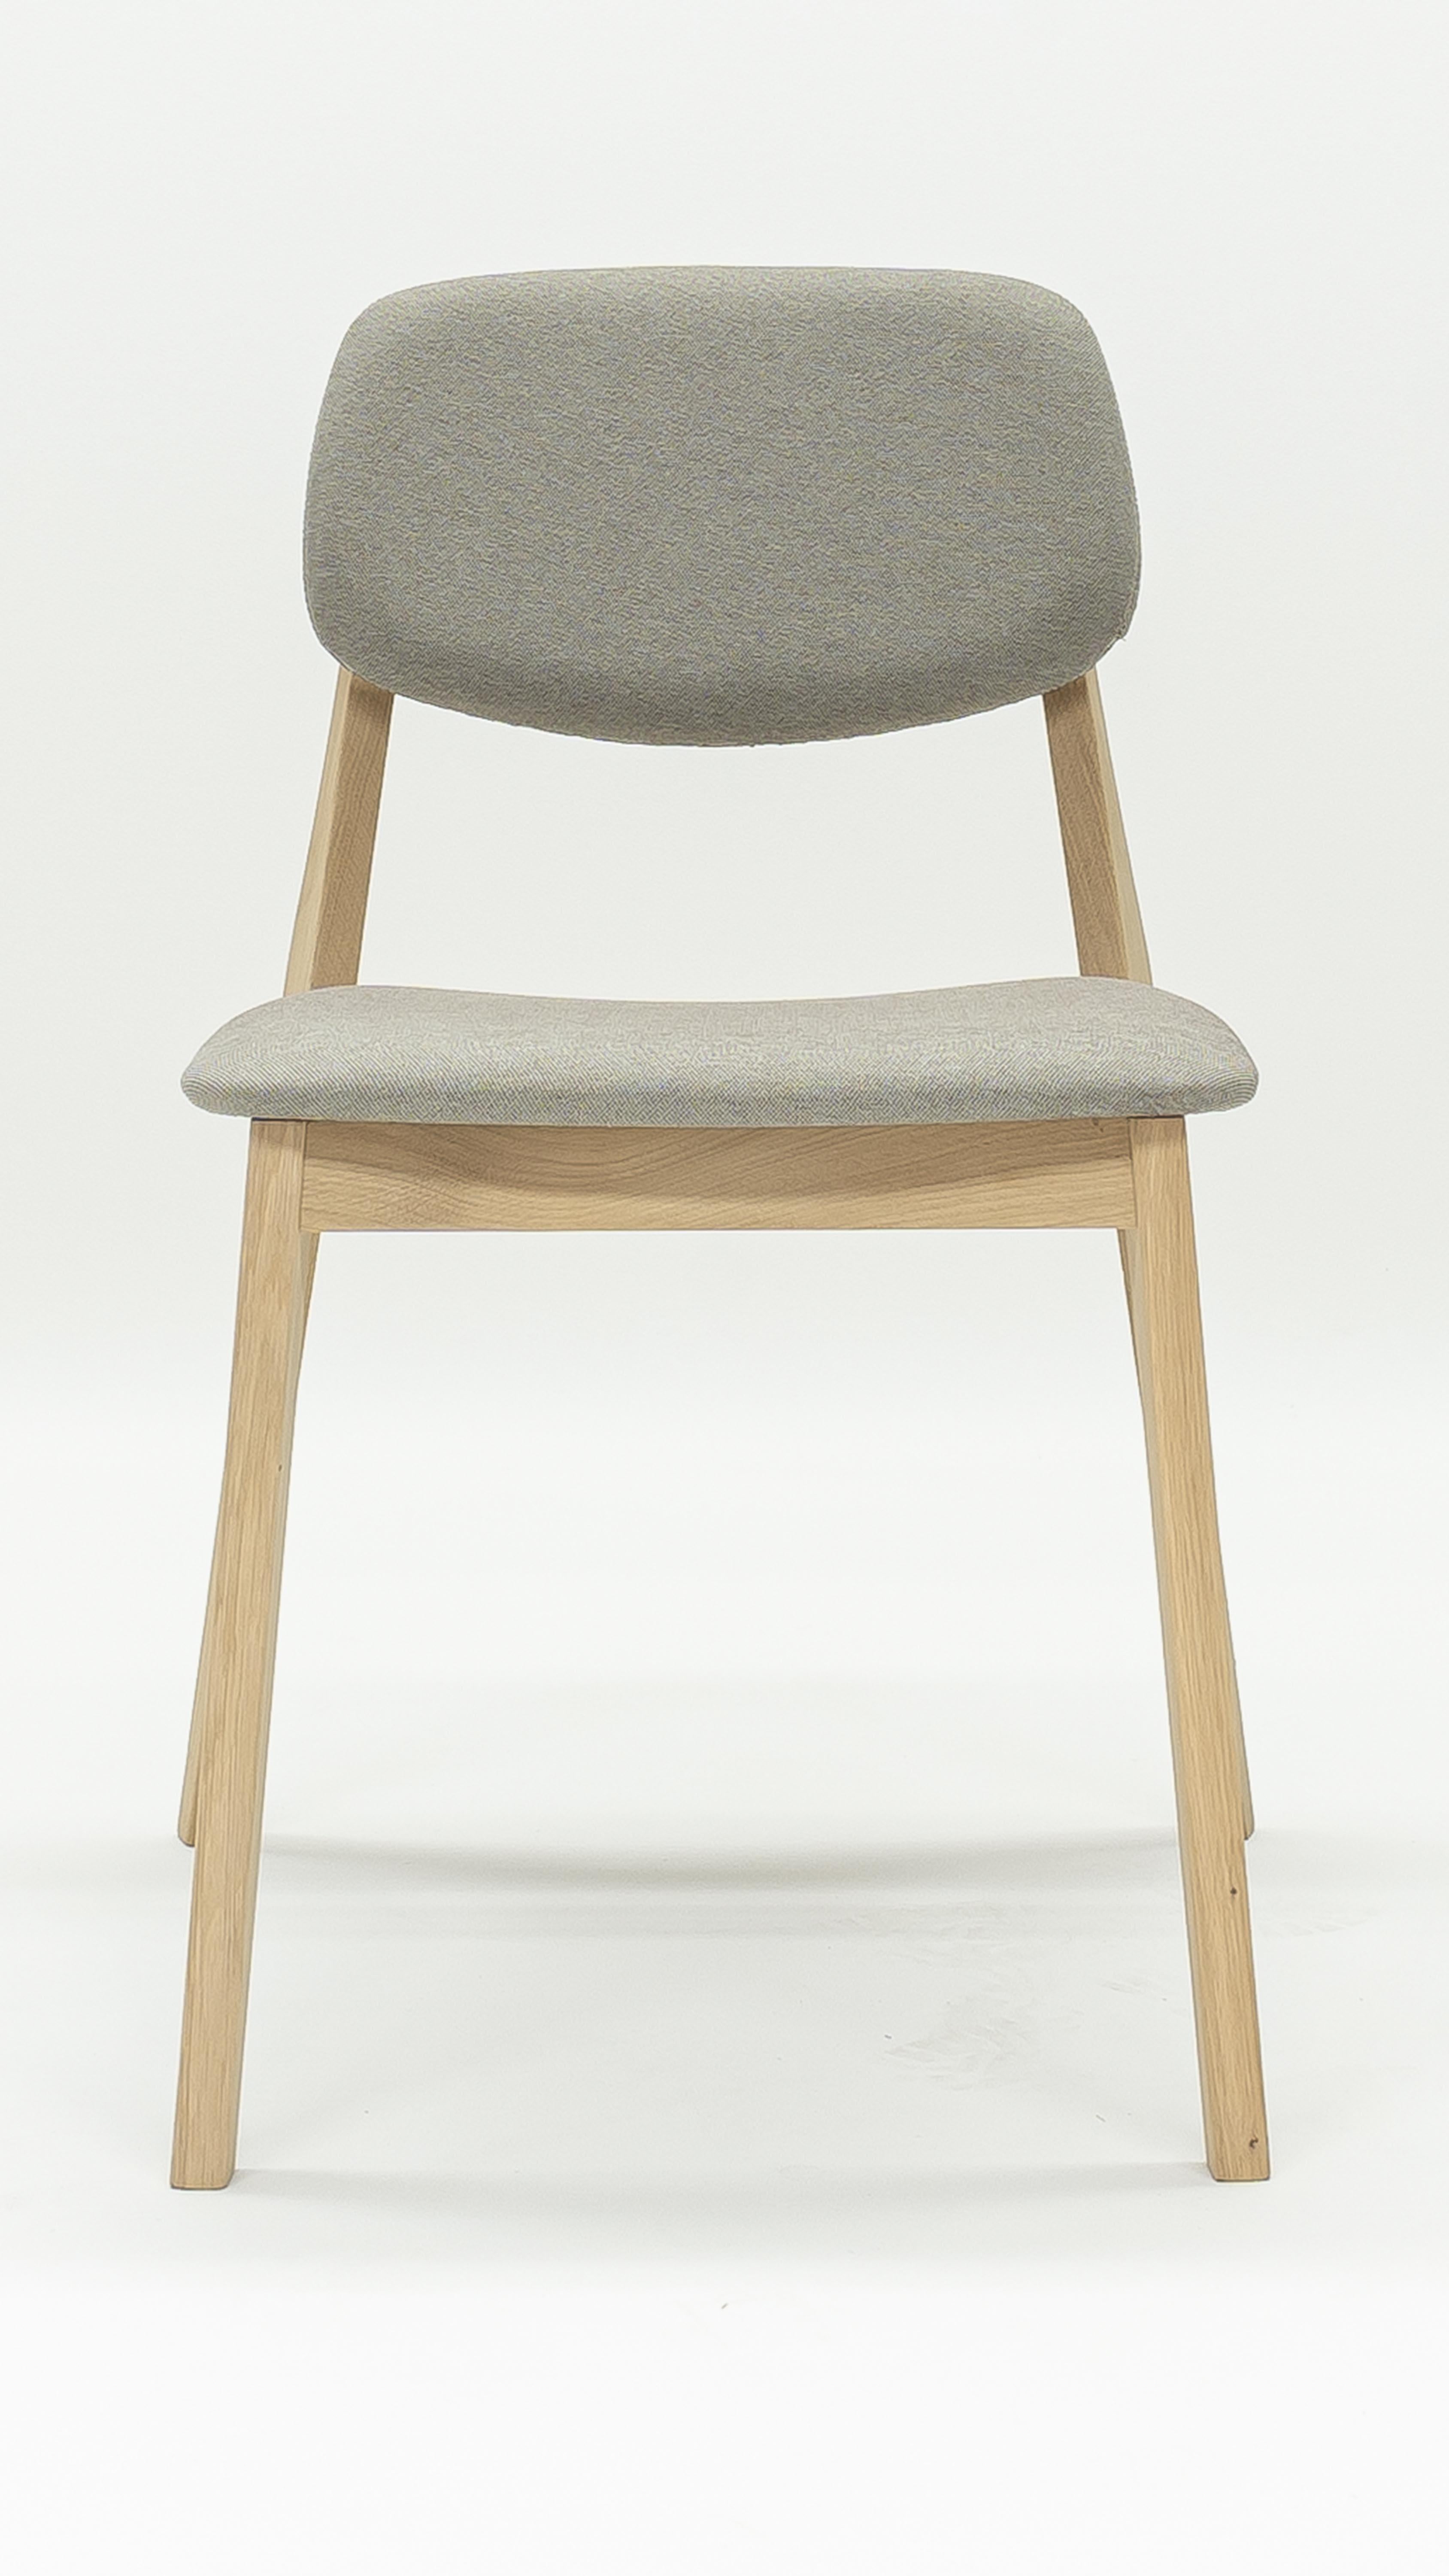 European Felber C14 Wood Chairs by Dietiker, Upholstered Beige, Set of 2 For Sale